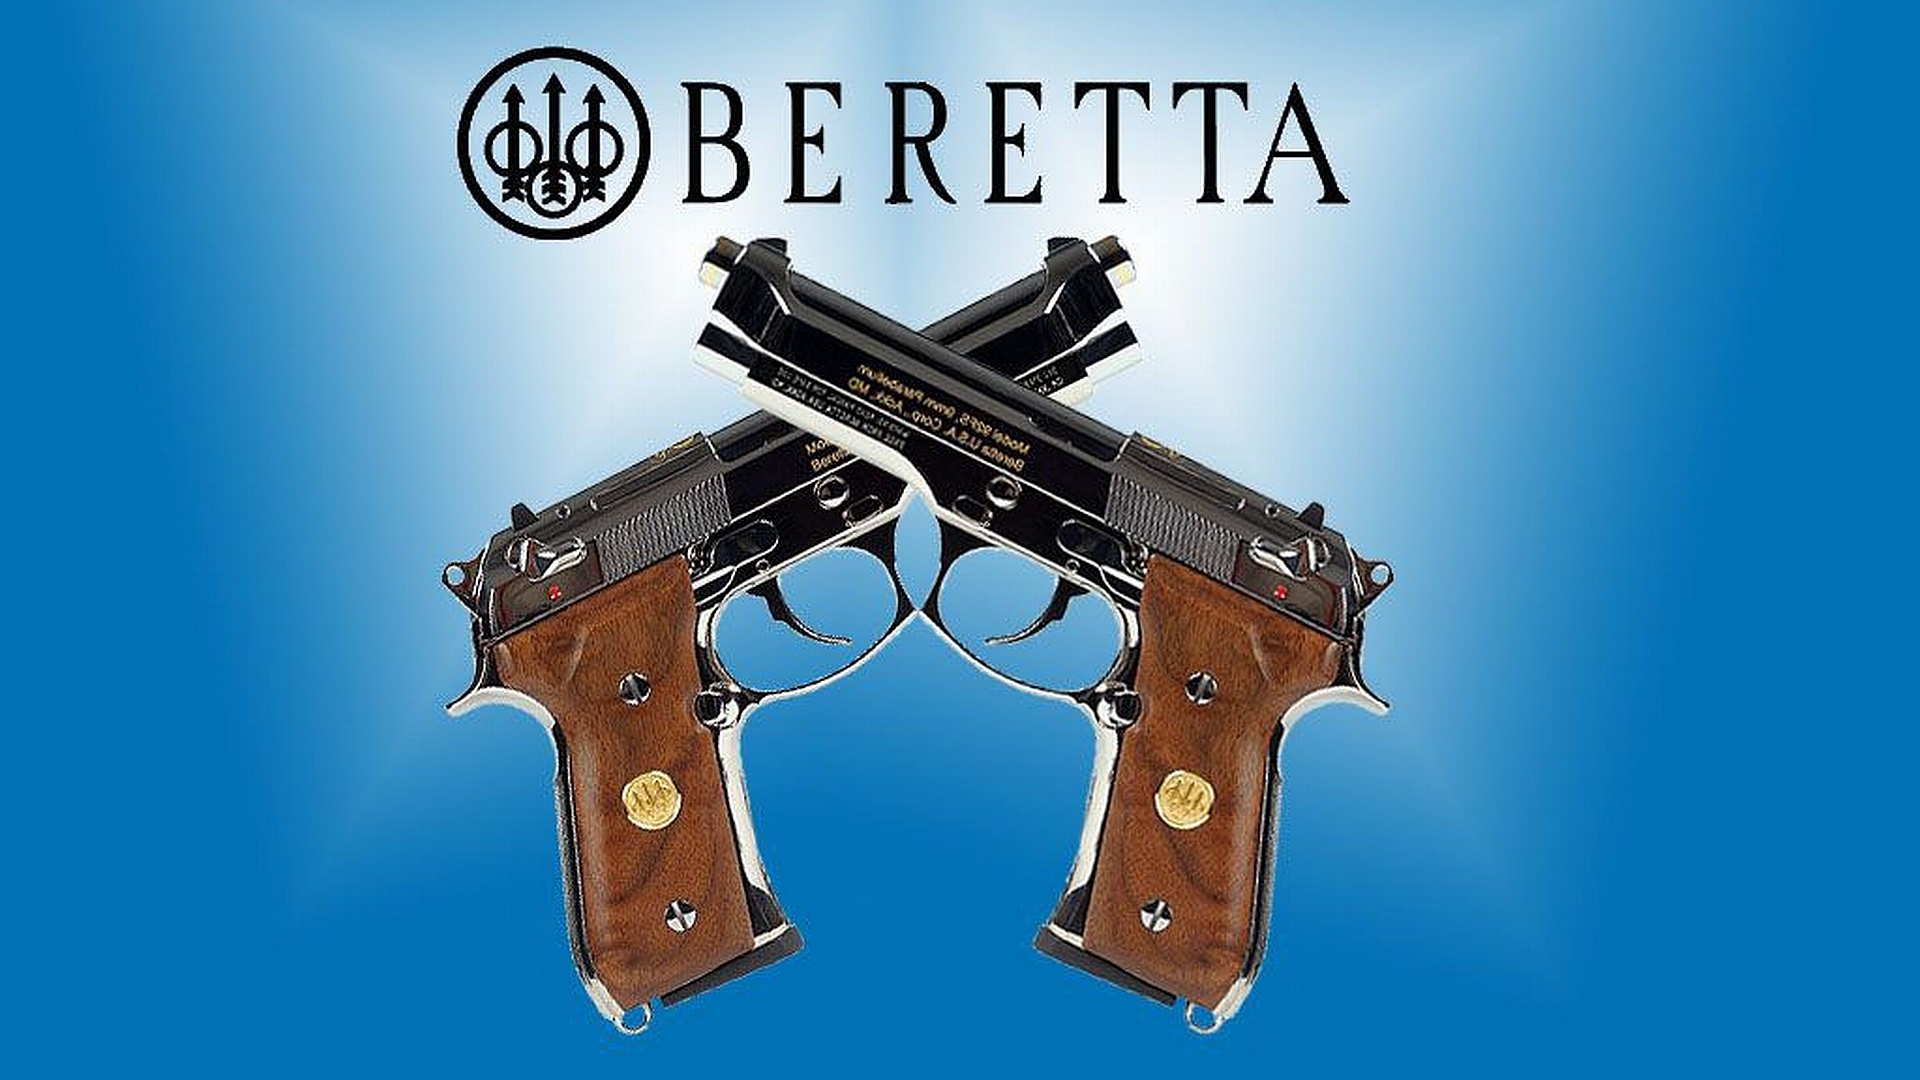 The Beretta pistol on a desktop wallpaper.